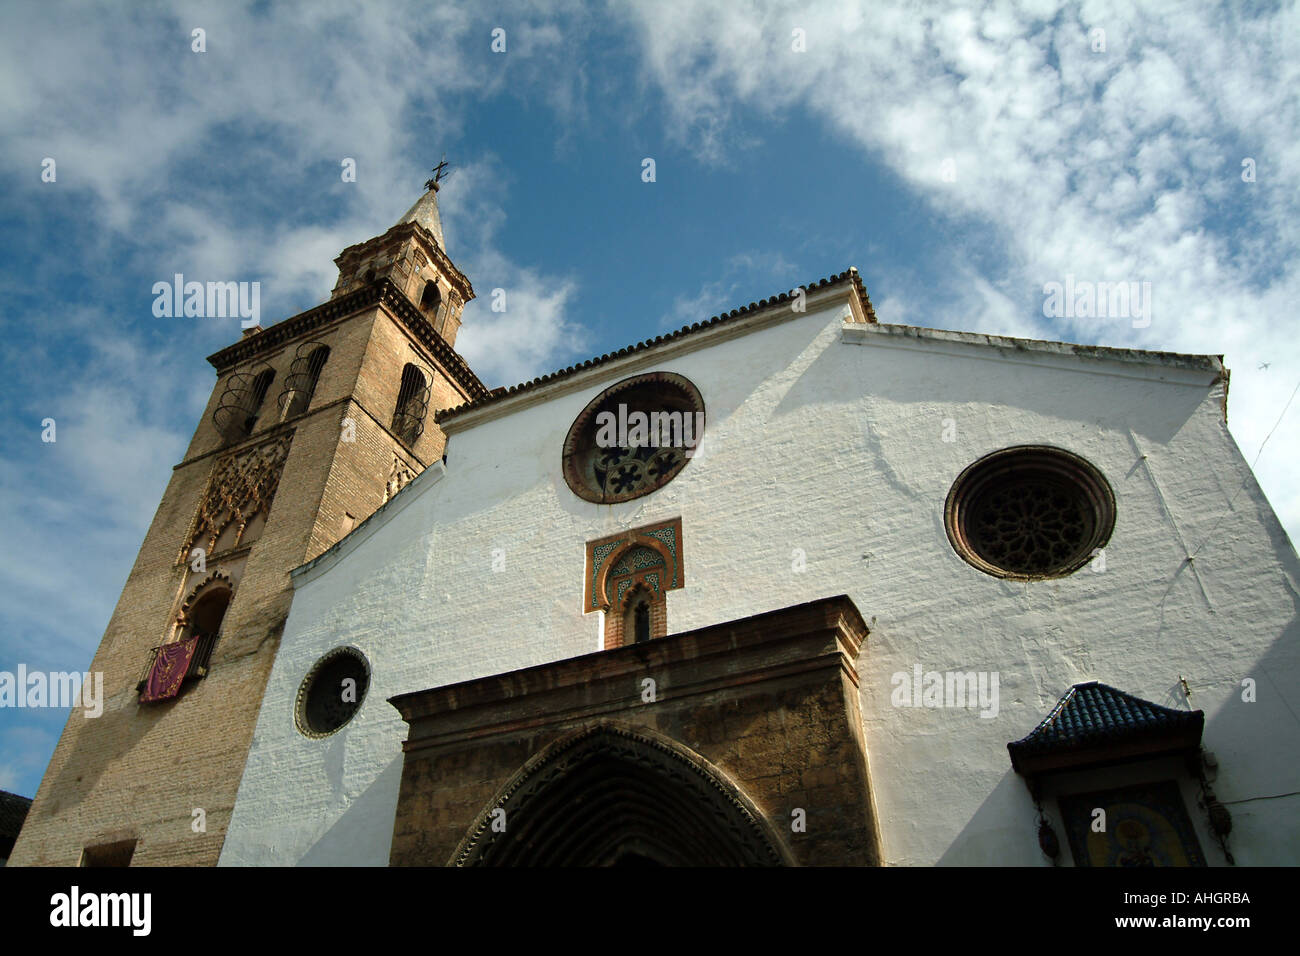 Built in Mudejar (Moorish) style in 14th century, Omnium Sanctorum is one of oldest churches in Seville, Spain. Stock Photo